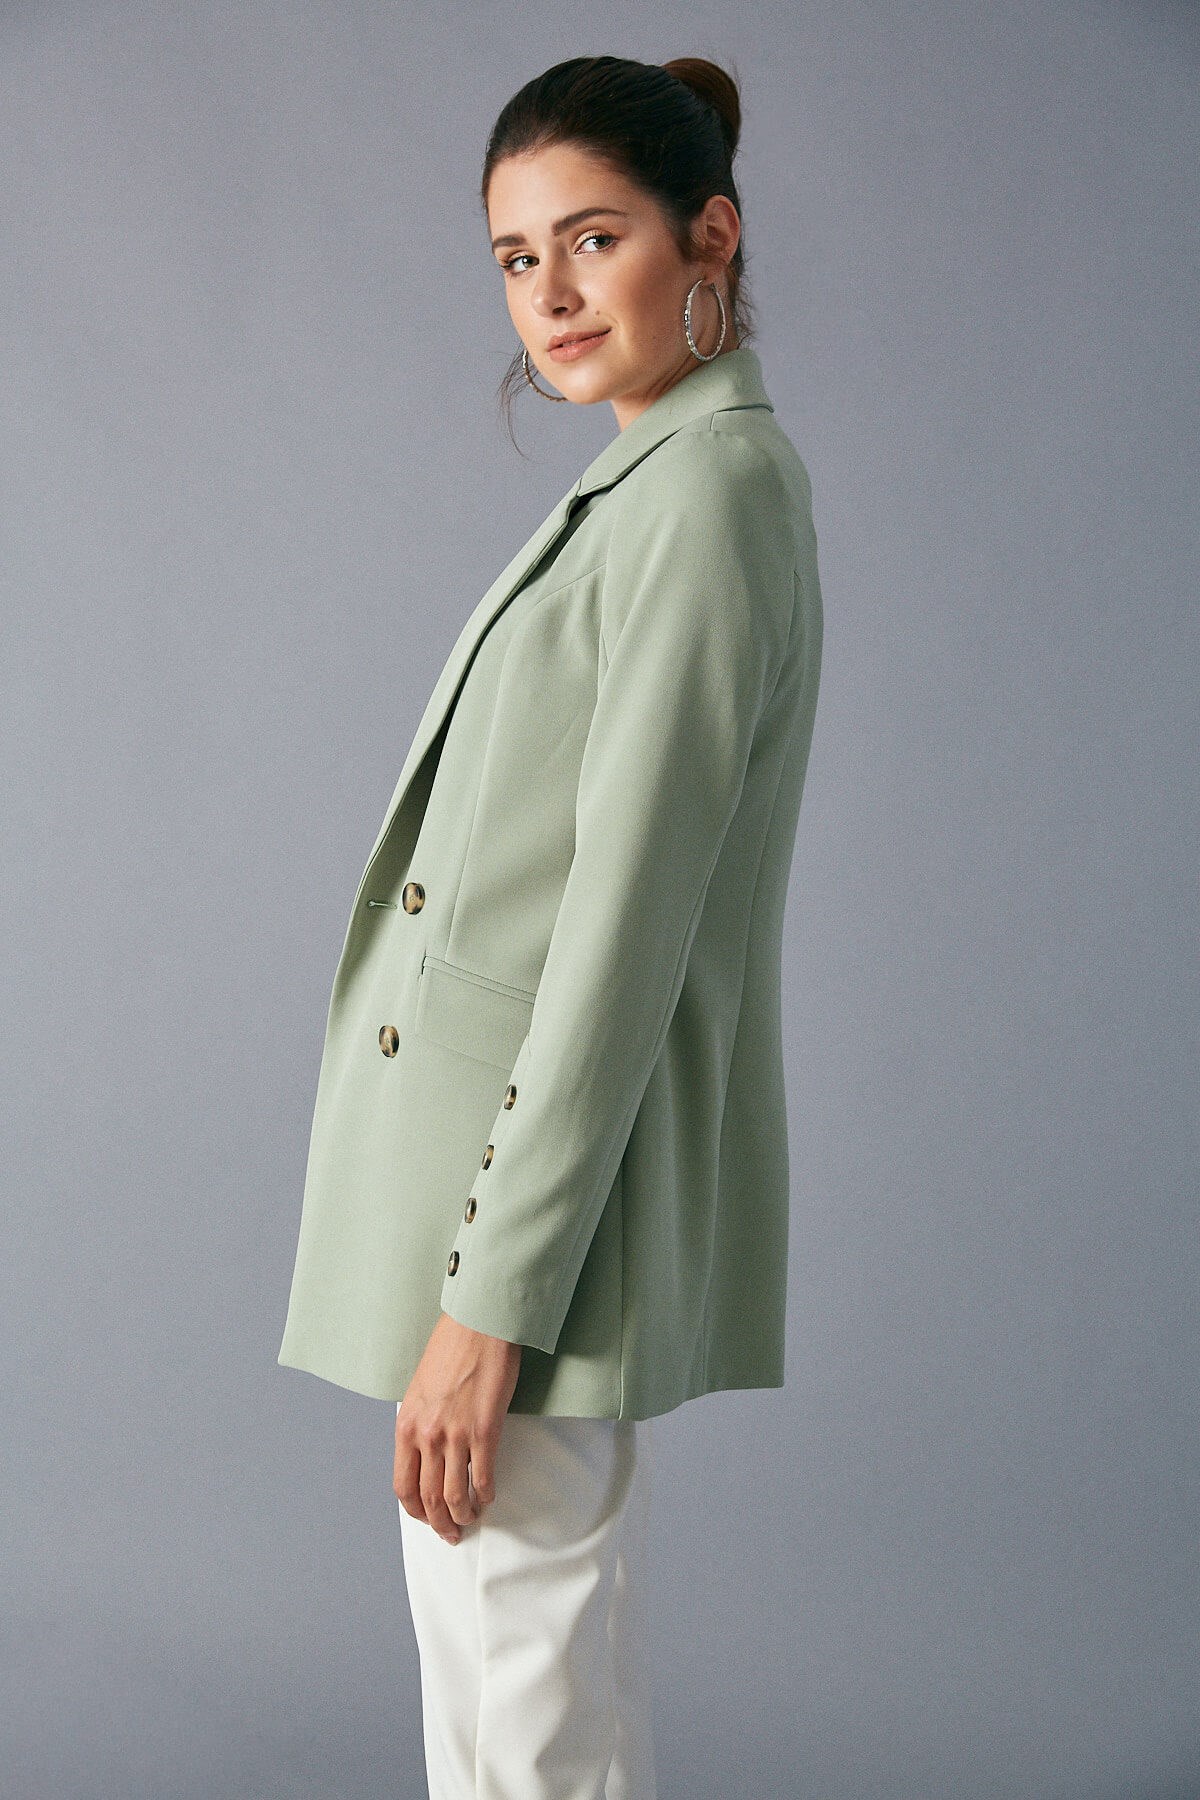 Kadın Düğme Detaylı Ceket Mint Yeşili | Marisammoda.com